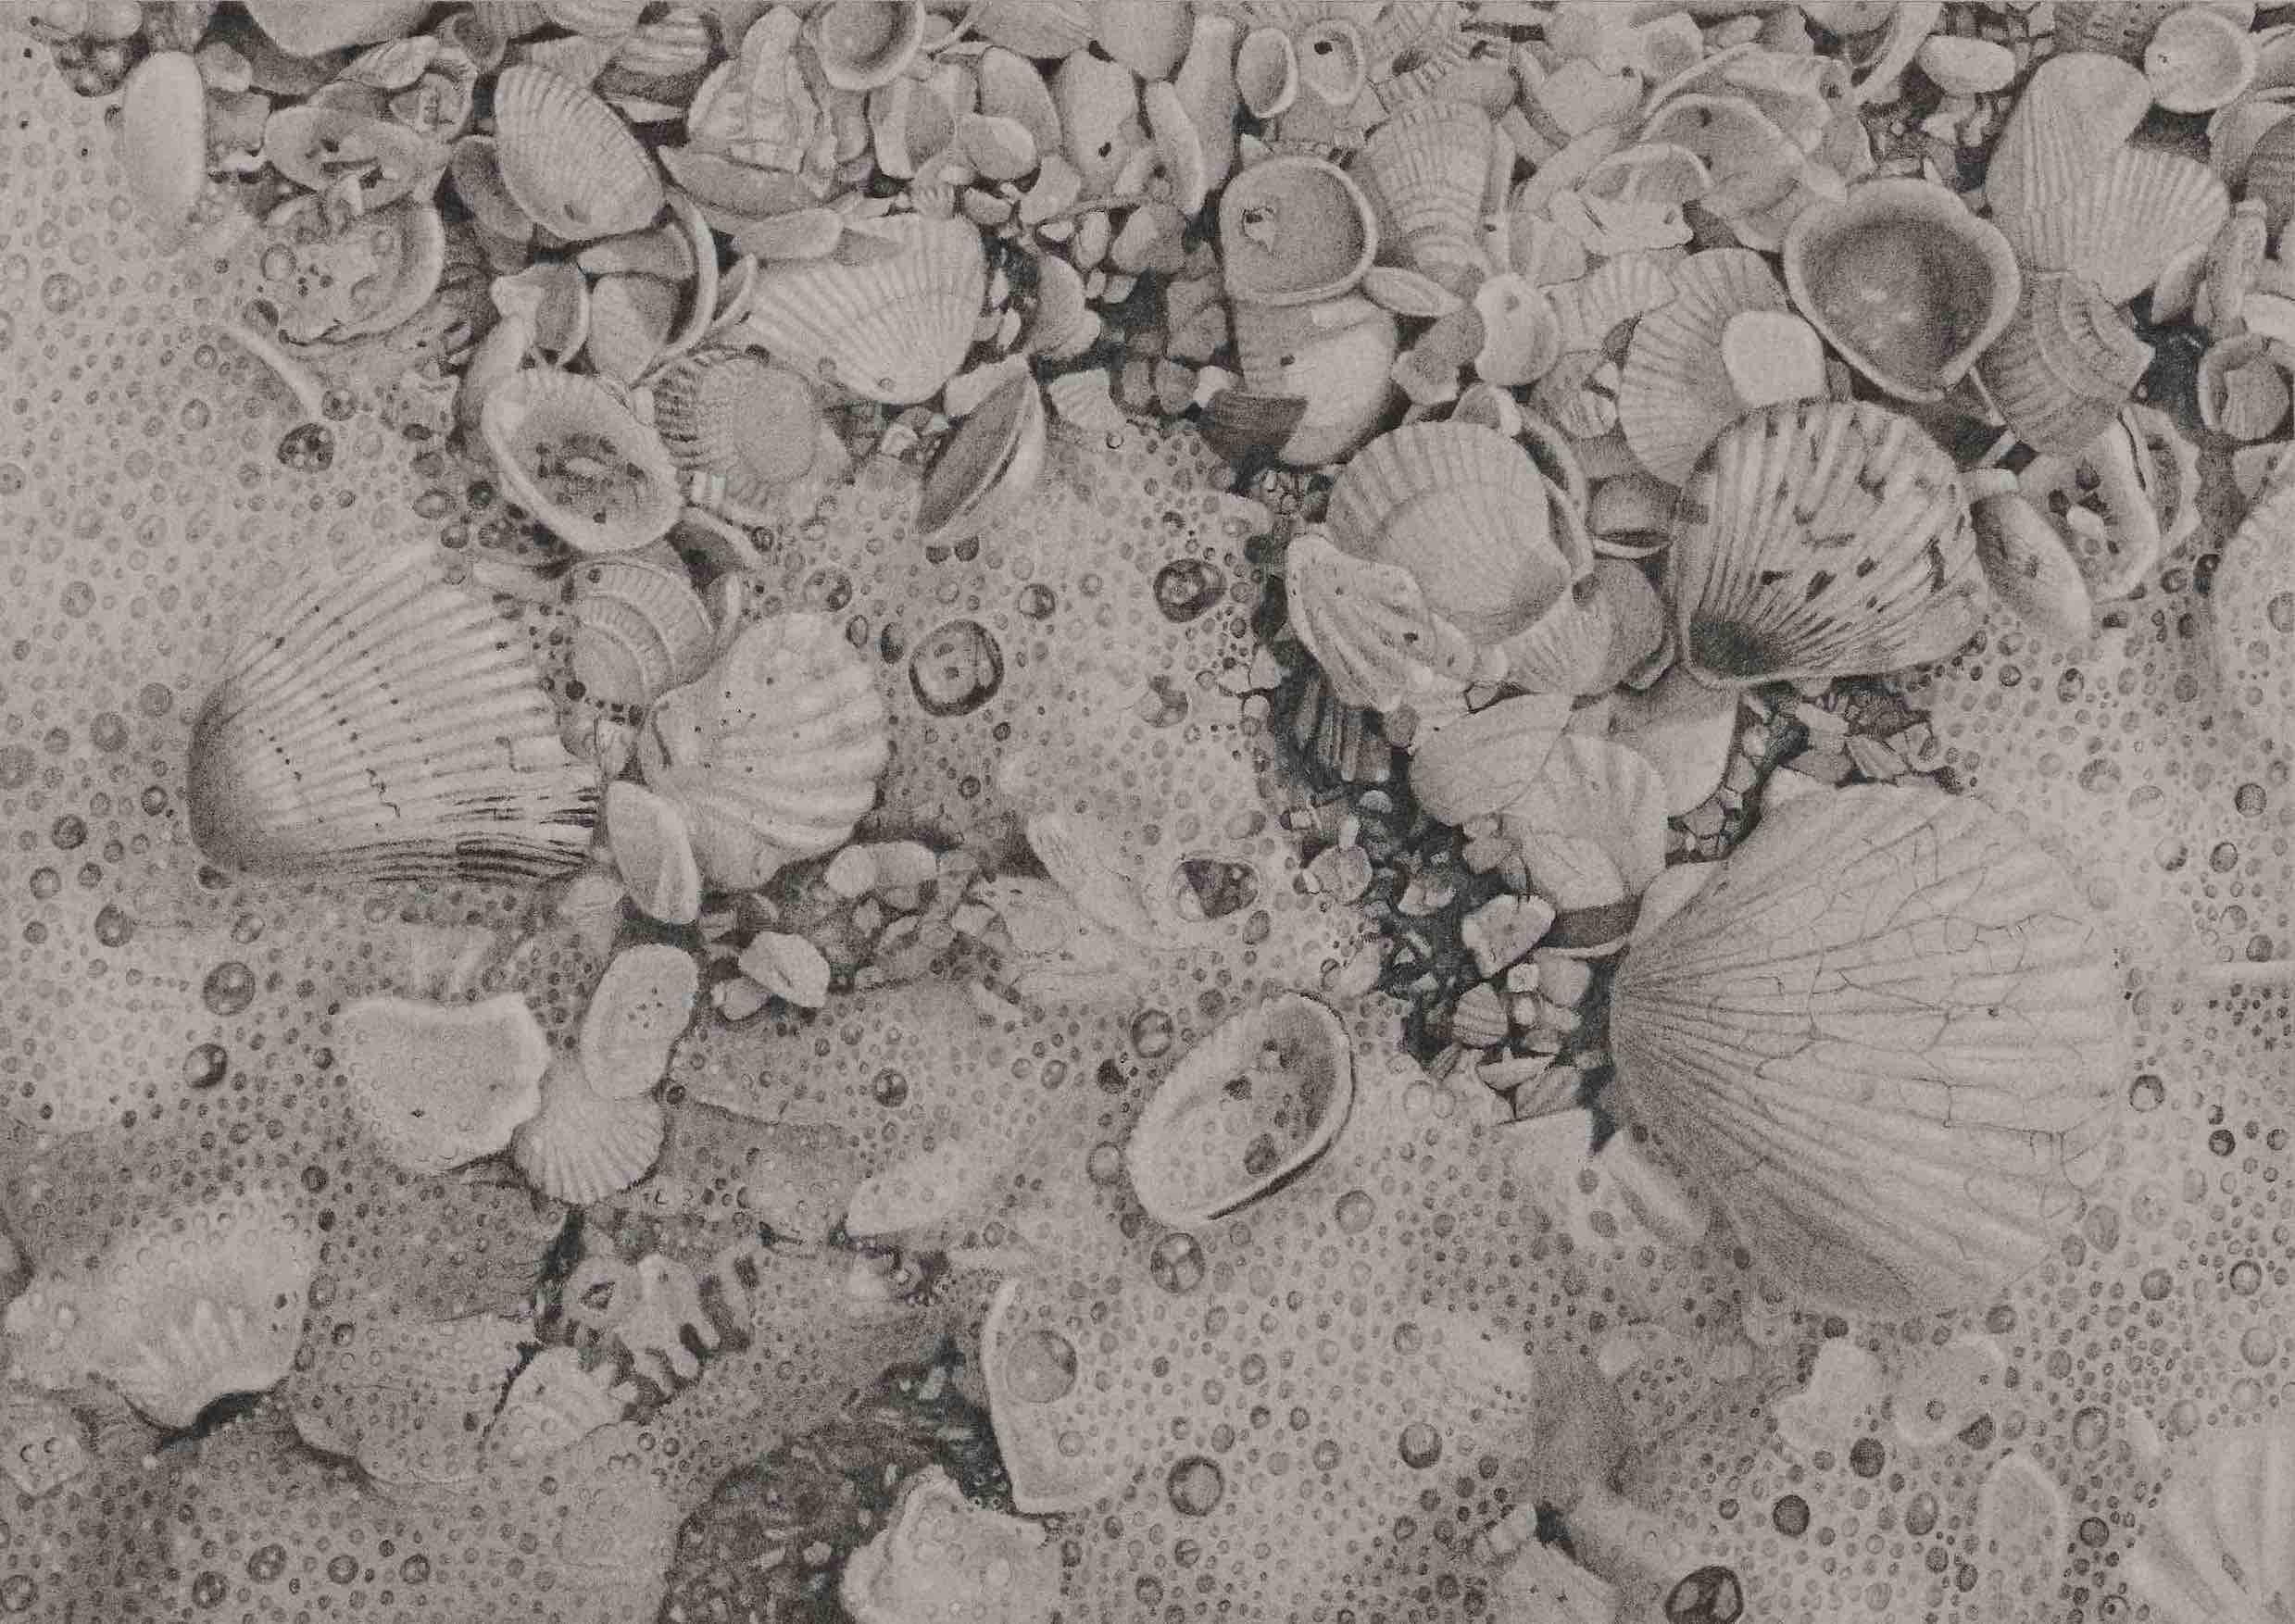 Mary Reilly Landscape Art - Seashells 6, Beach-strewn seashells from Sanibel Island, Graphite on Paper